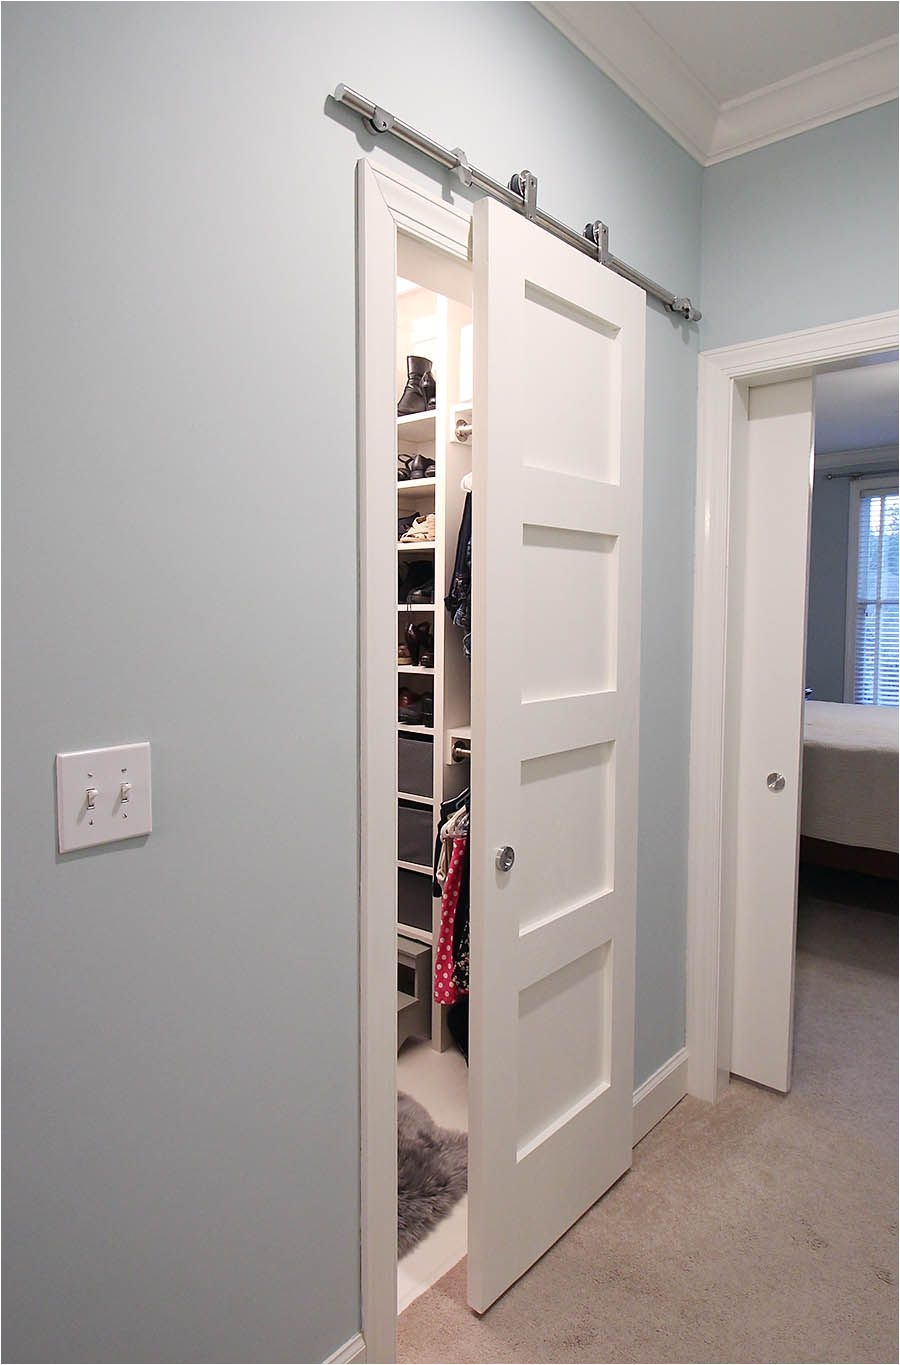 diy closet door slide or refacing my existing flush mount sliding doors on my walk in closet i can do this